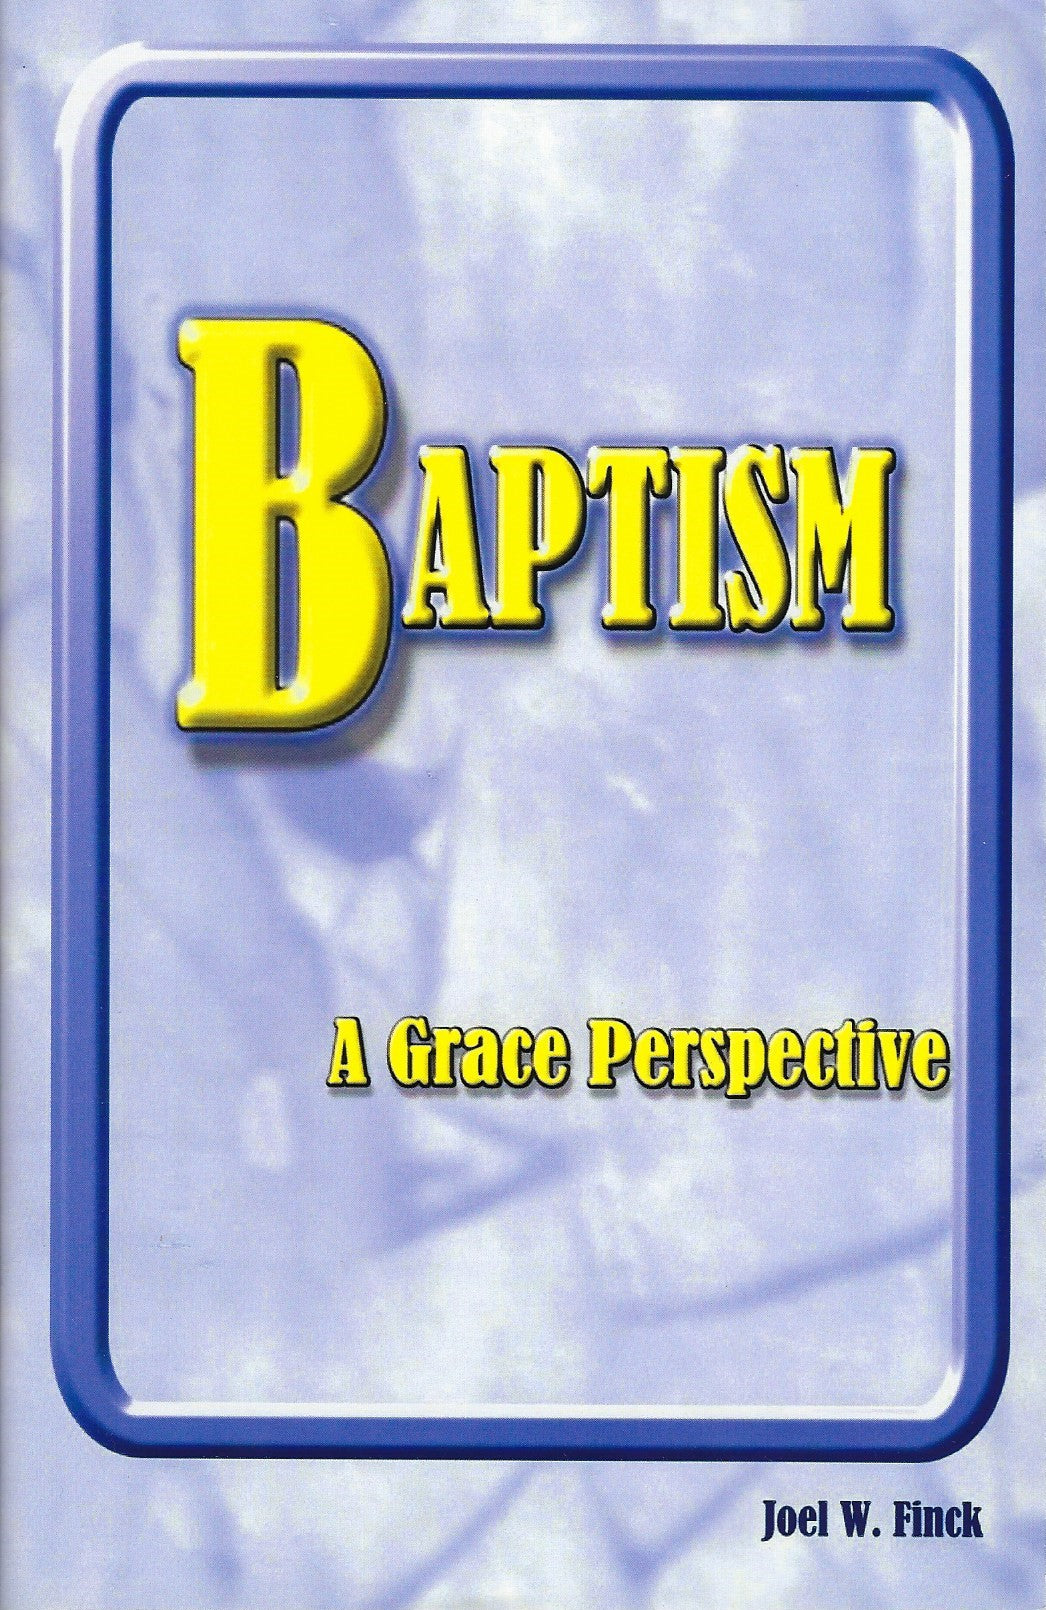 Baptism: A Grace Perspective